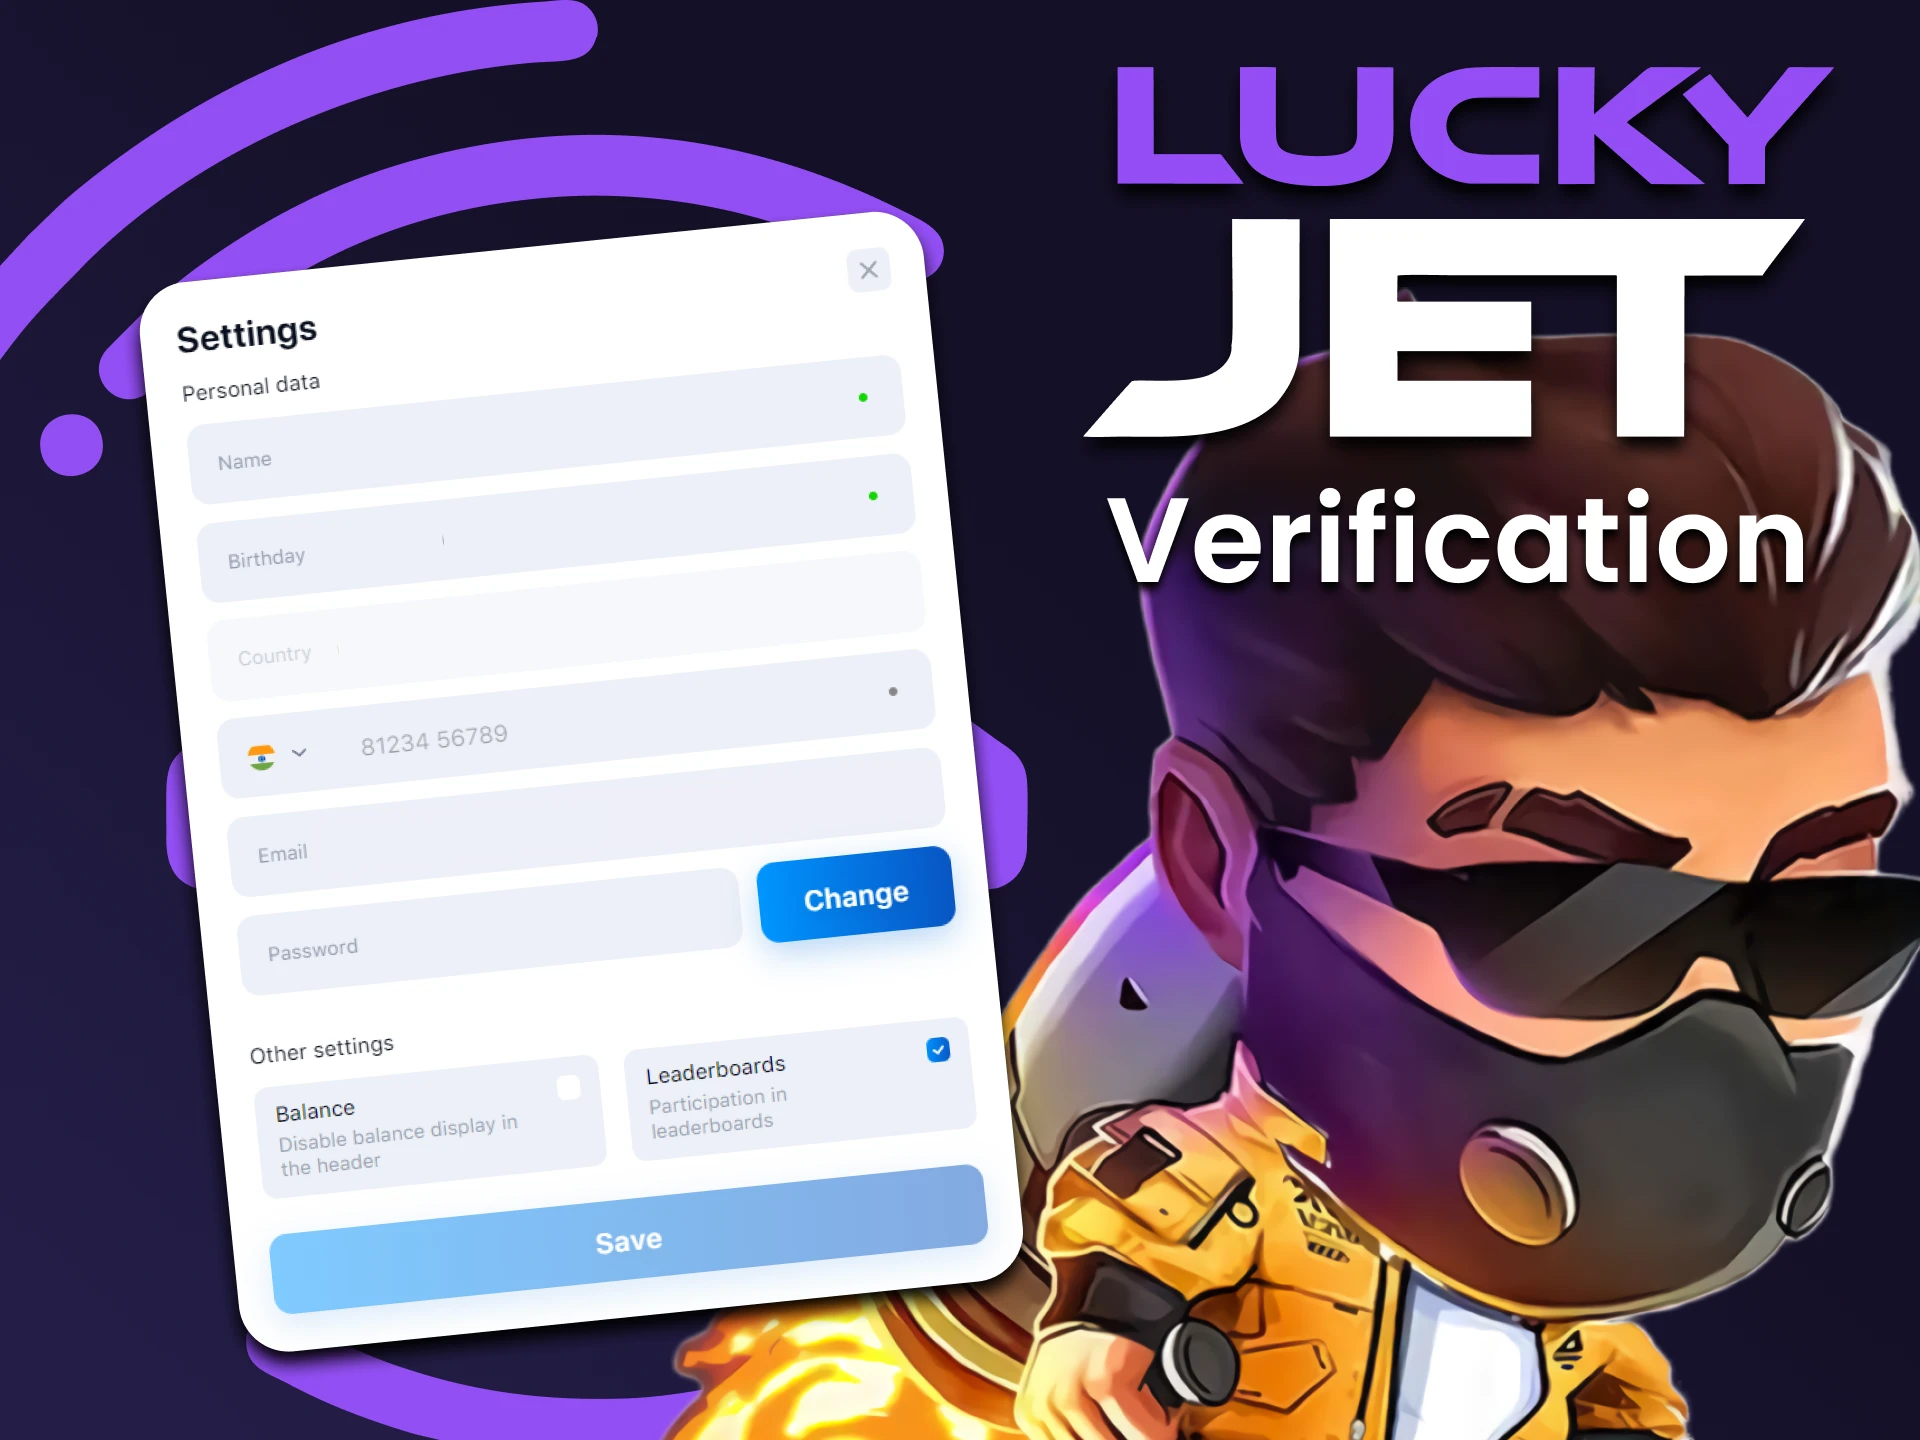 Rellena tus datos personales para jugar a Lucky Jet.